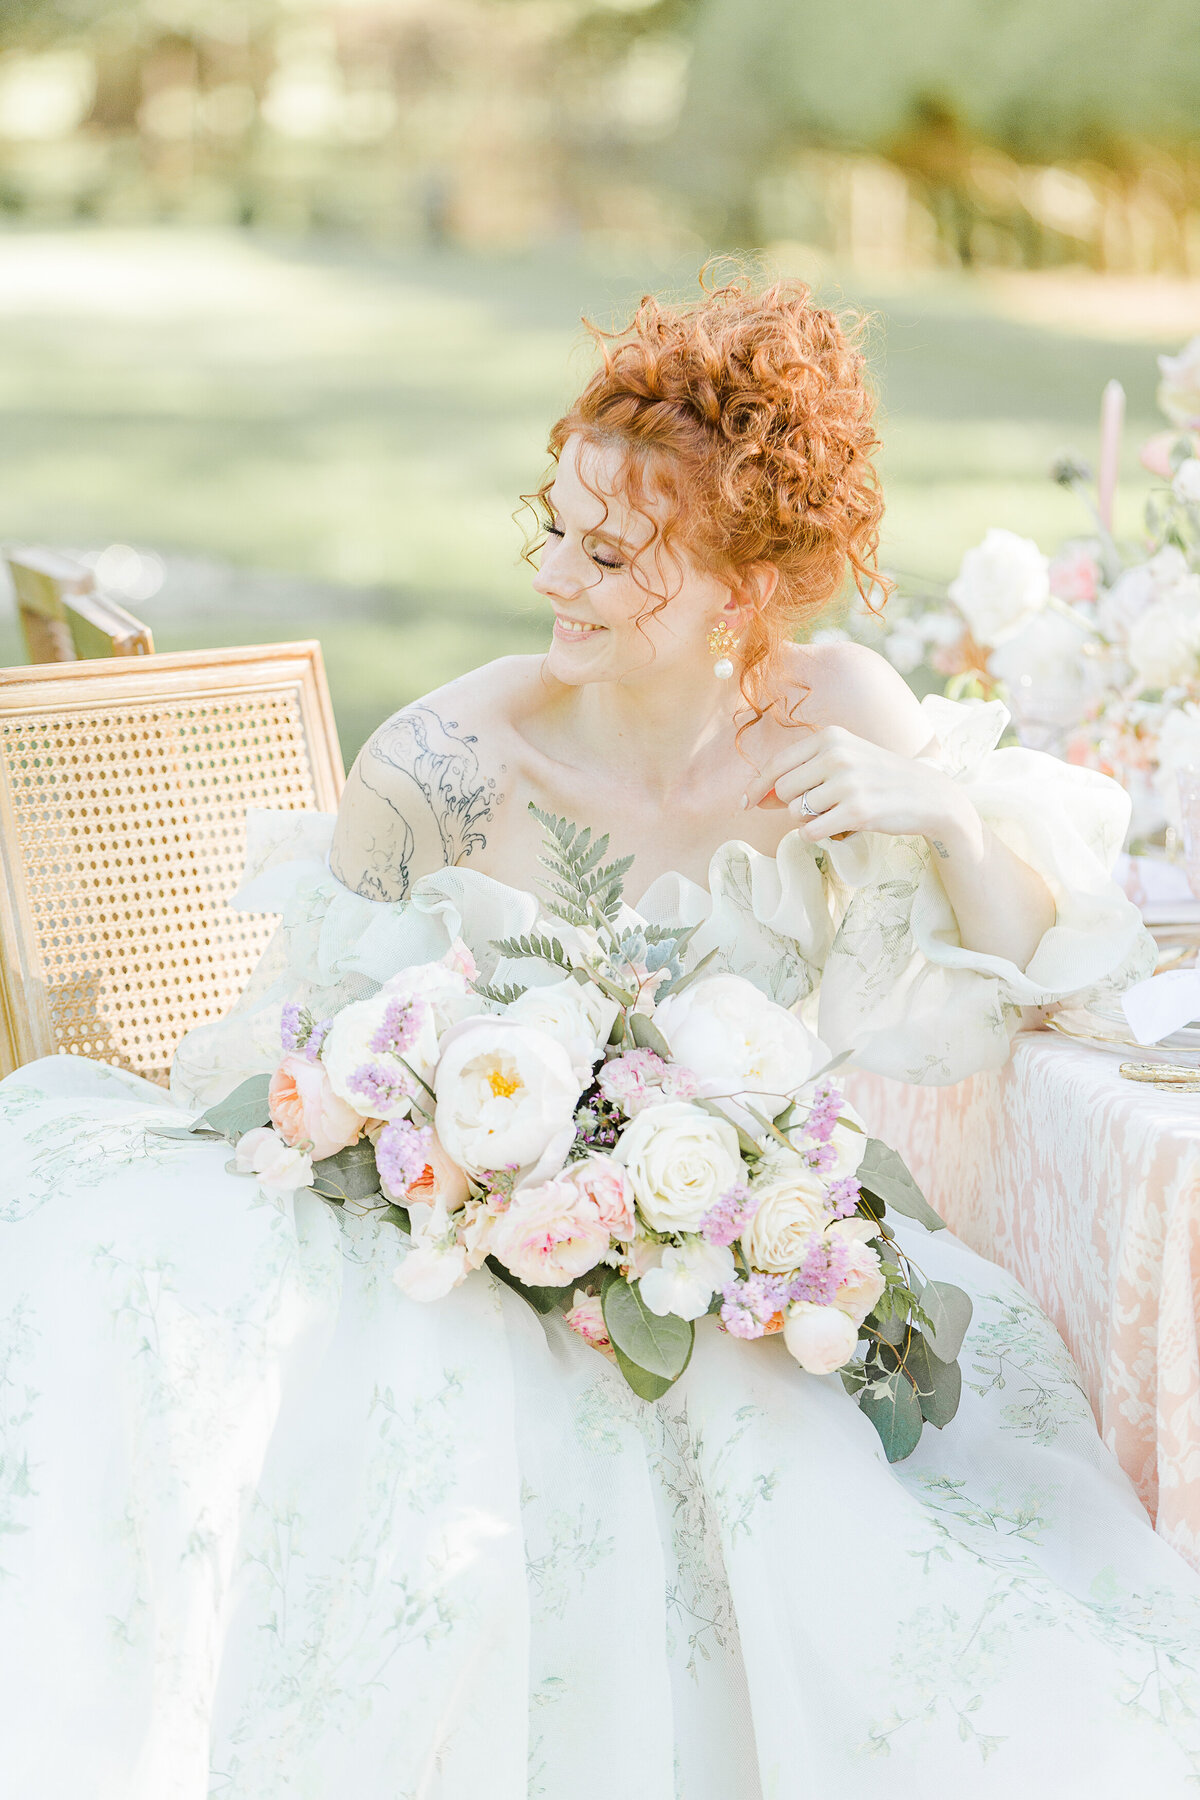 New England and Destination Wedding Photographer | Lia Rose Weddings